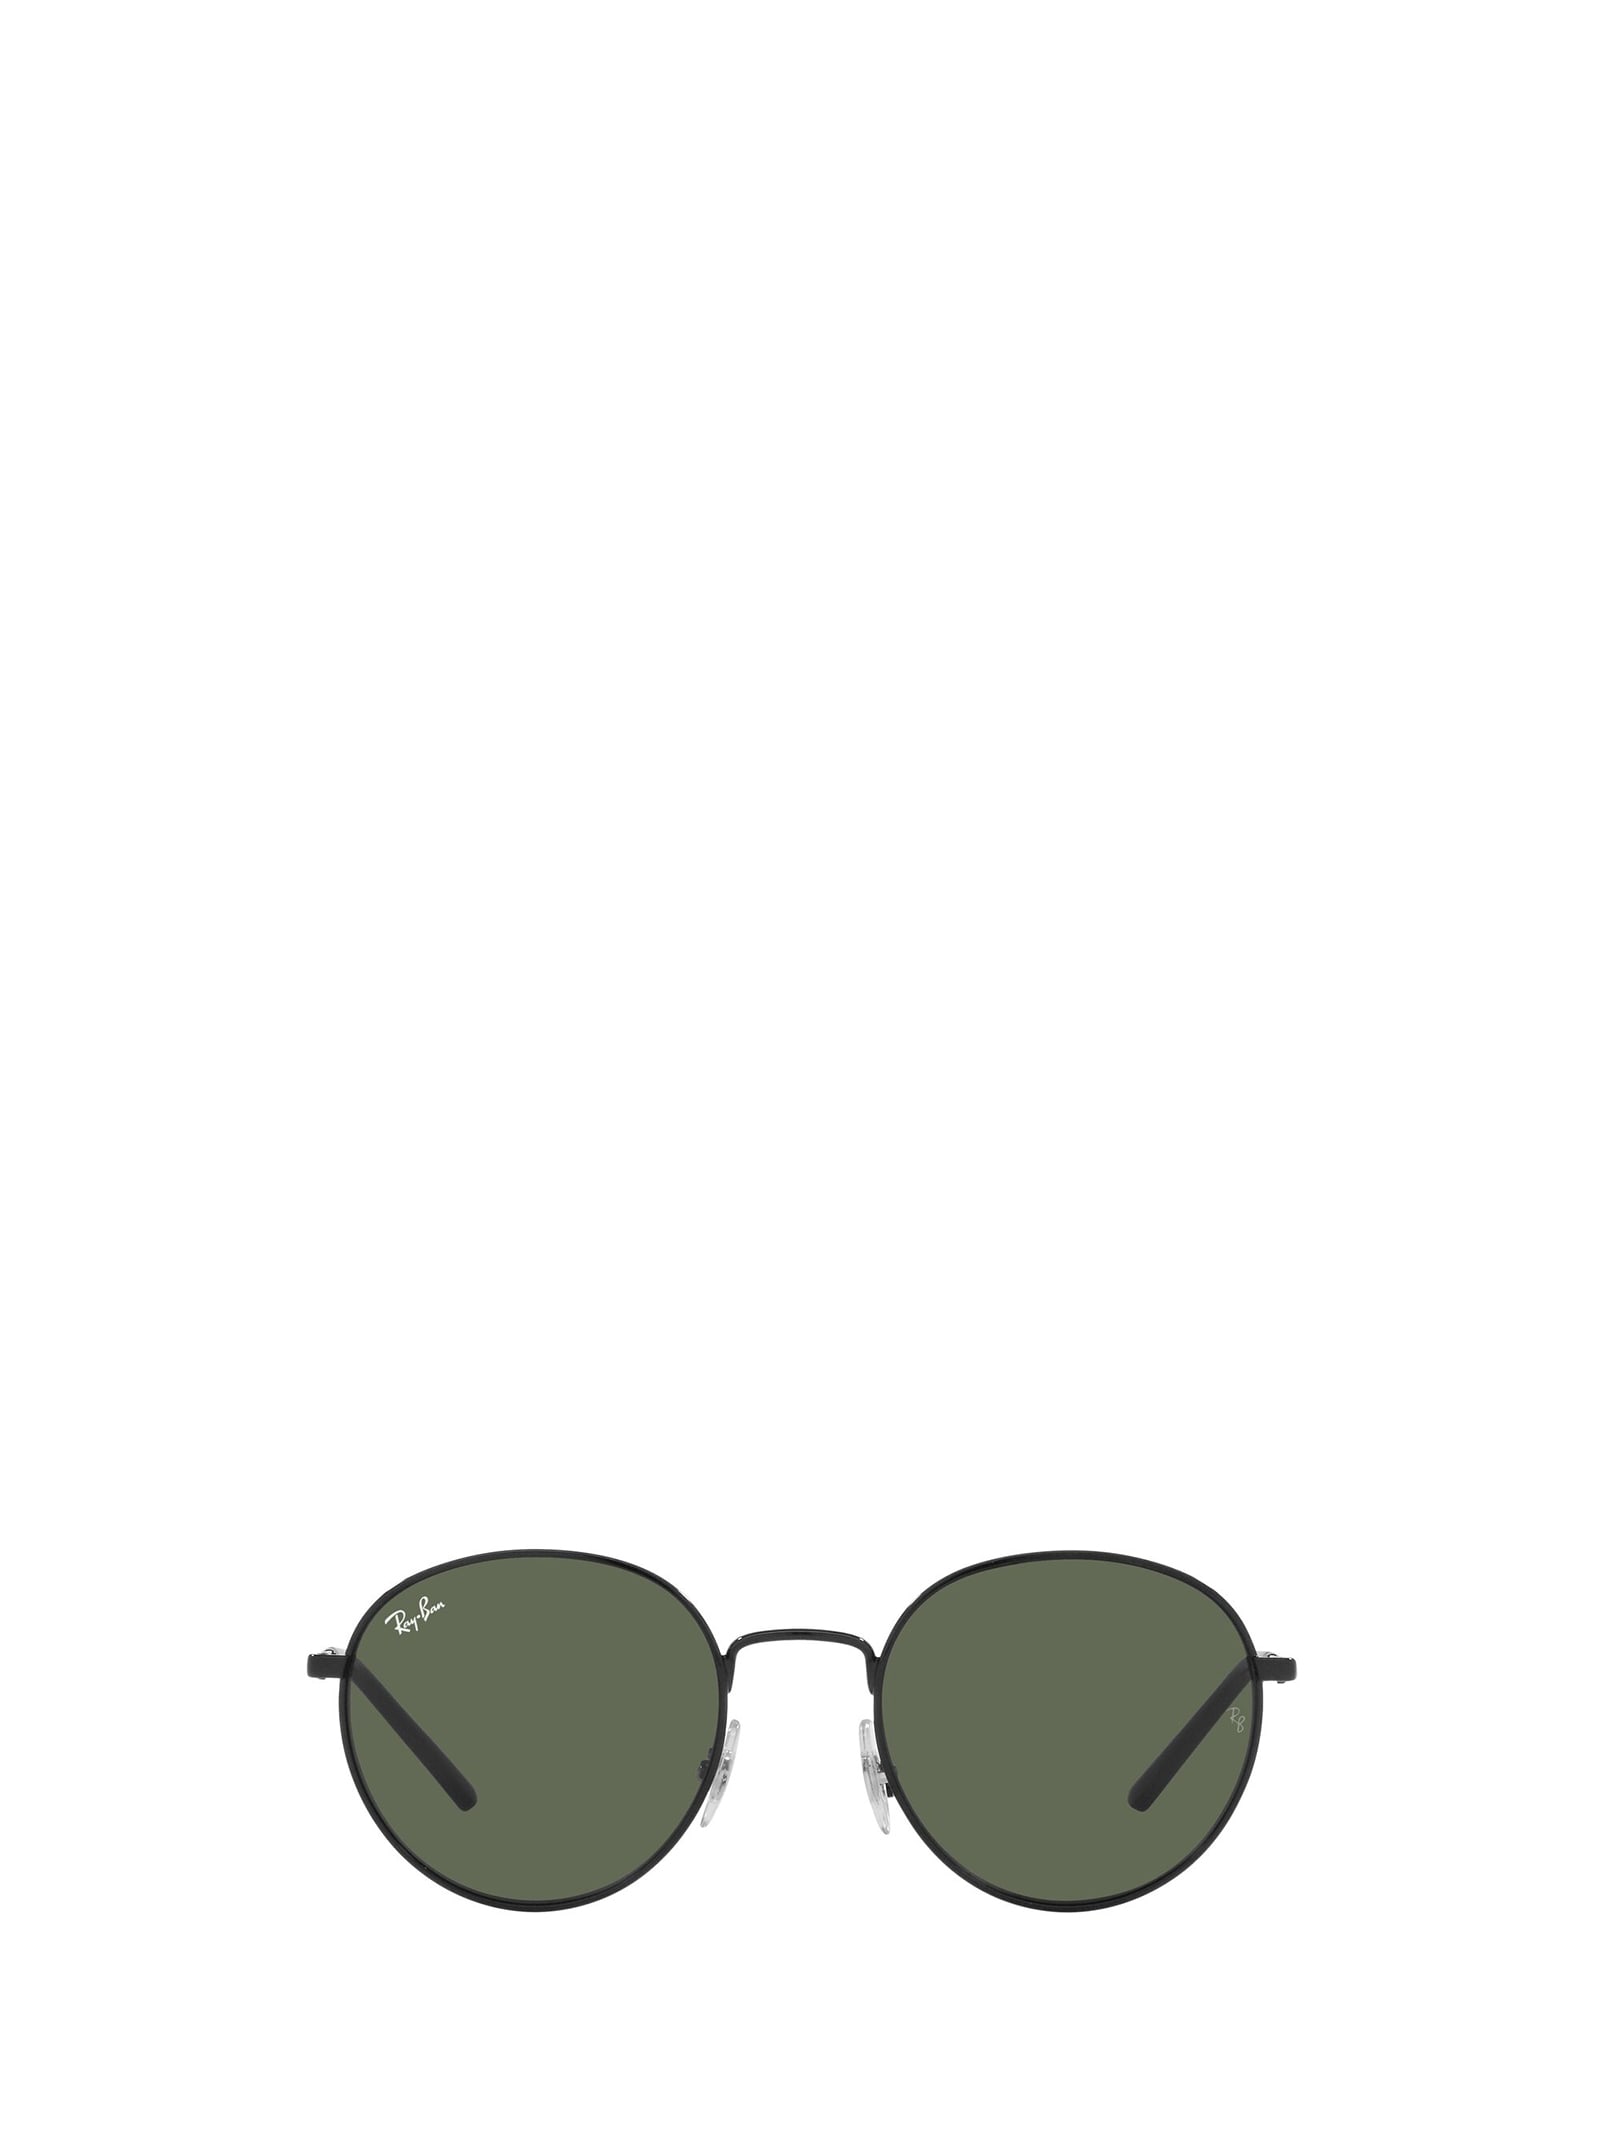 Ray-Ban Rb3681 Black Sunglasses